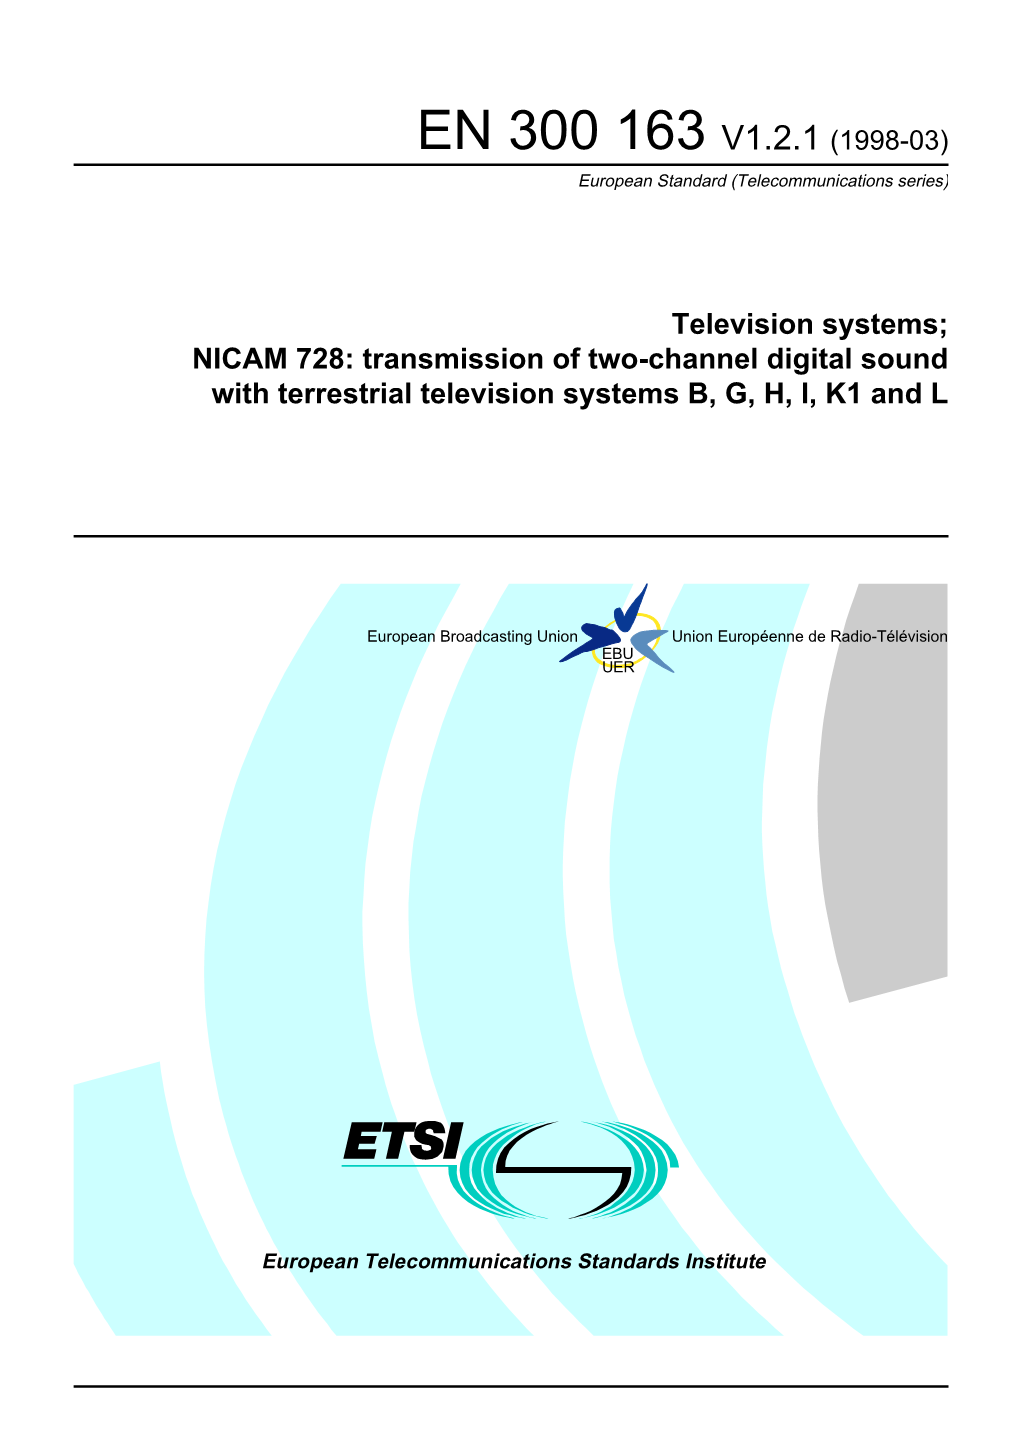 EN 300 163 V1.2.1 (1998-03) European Standard (Telecommunications Series)